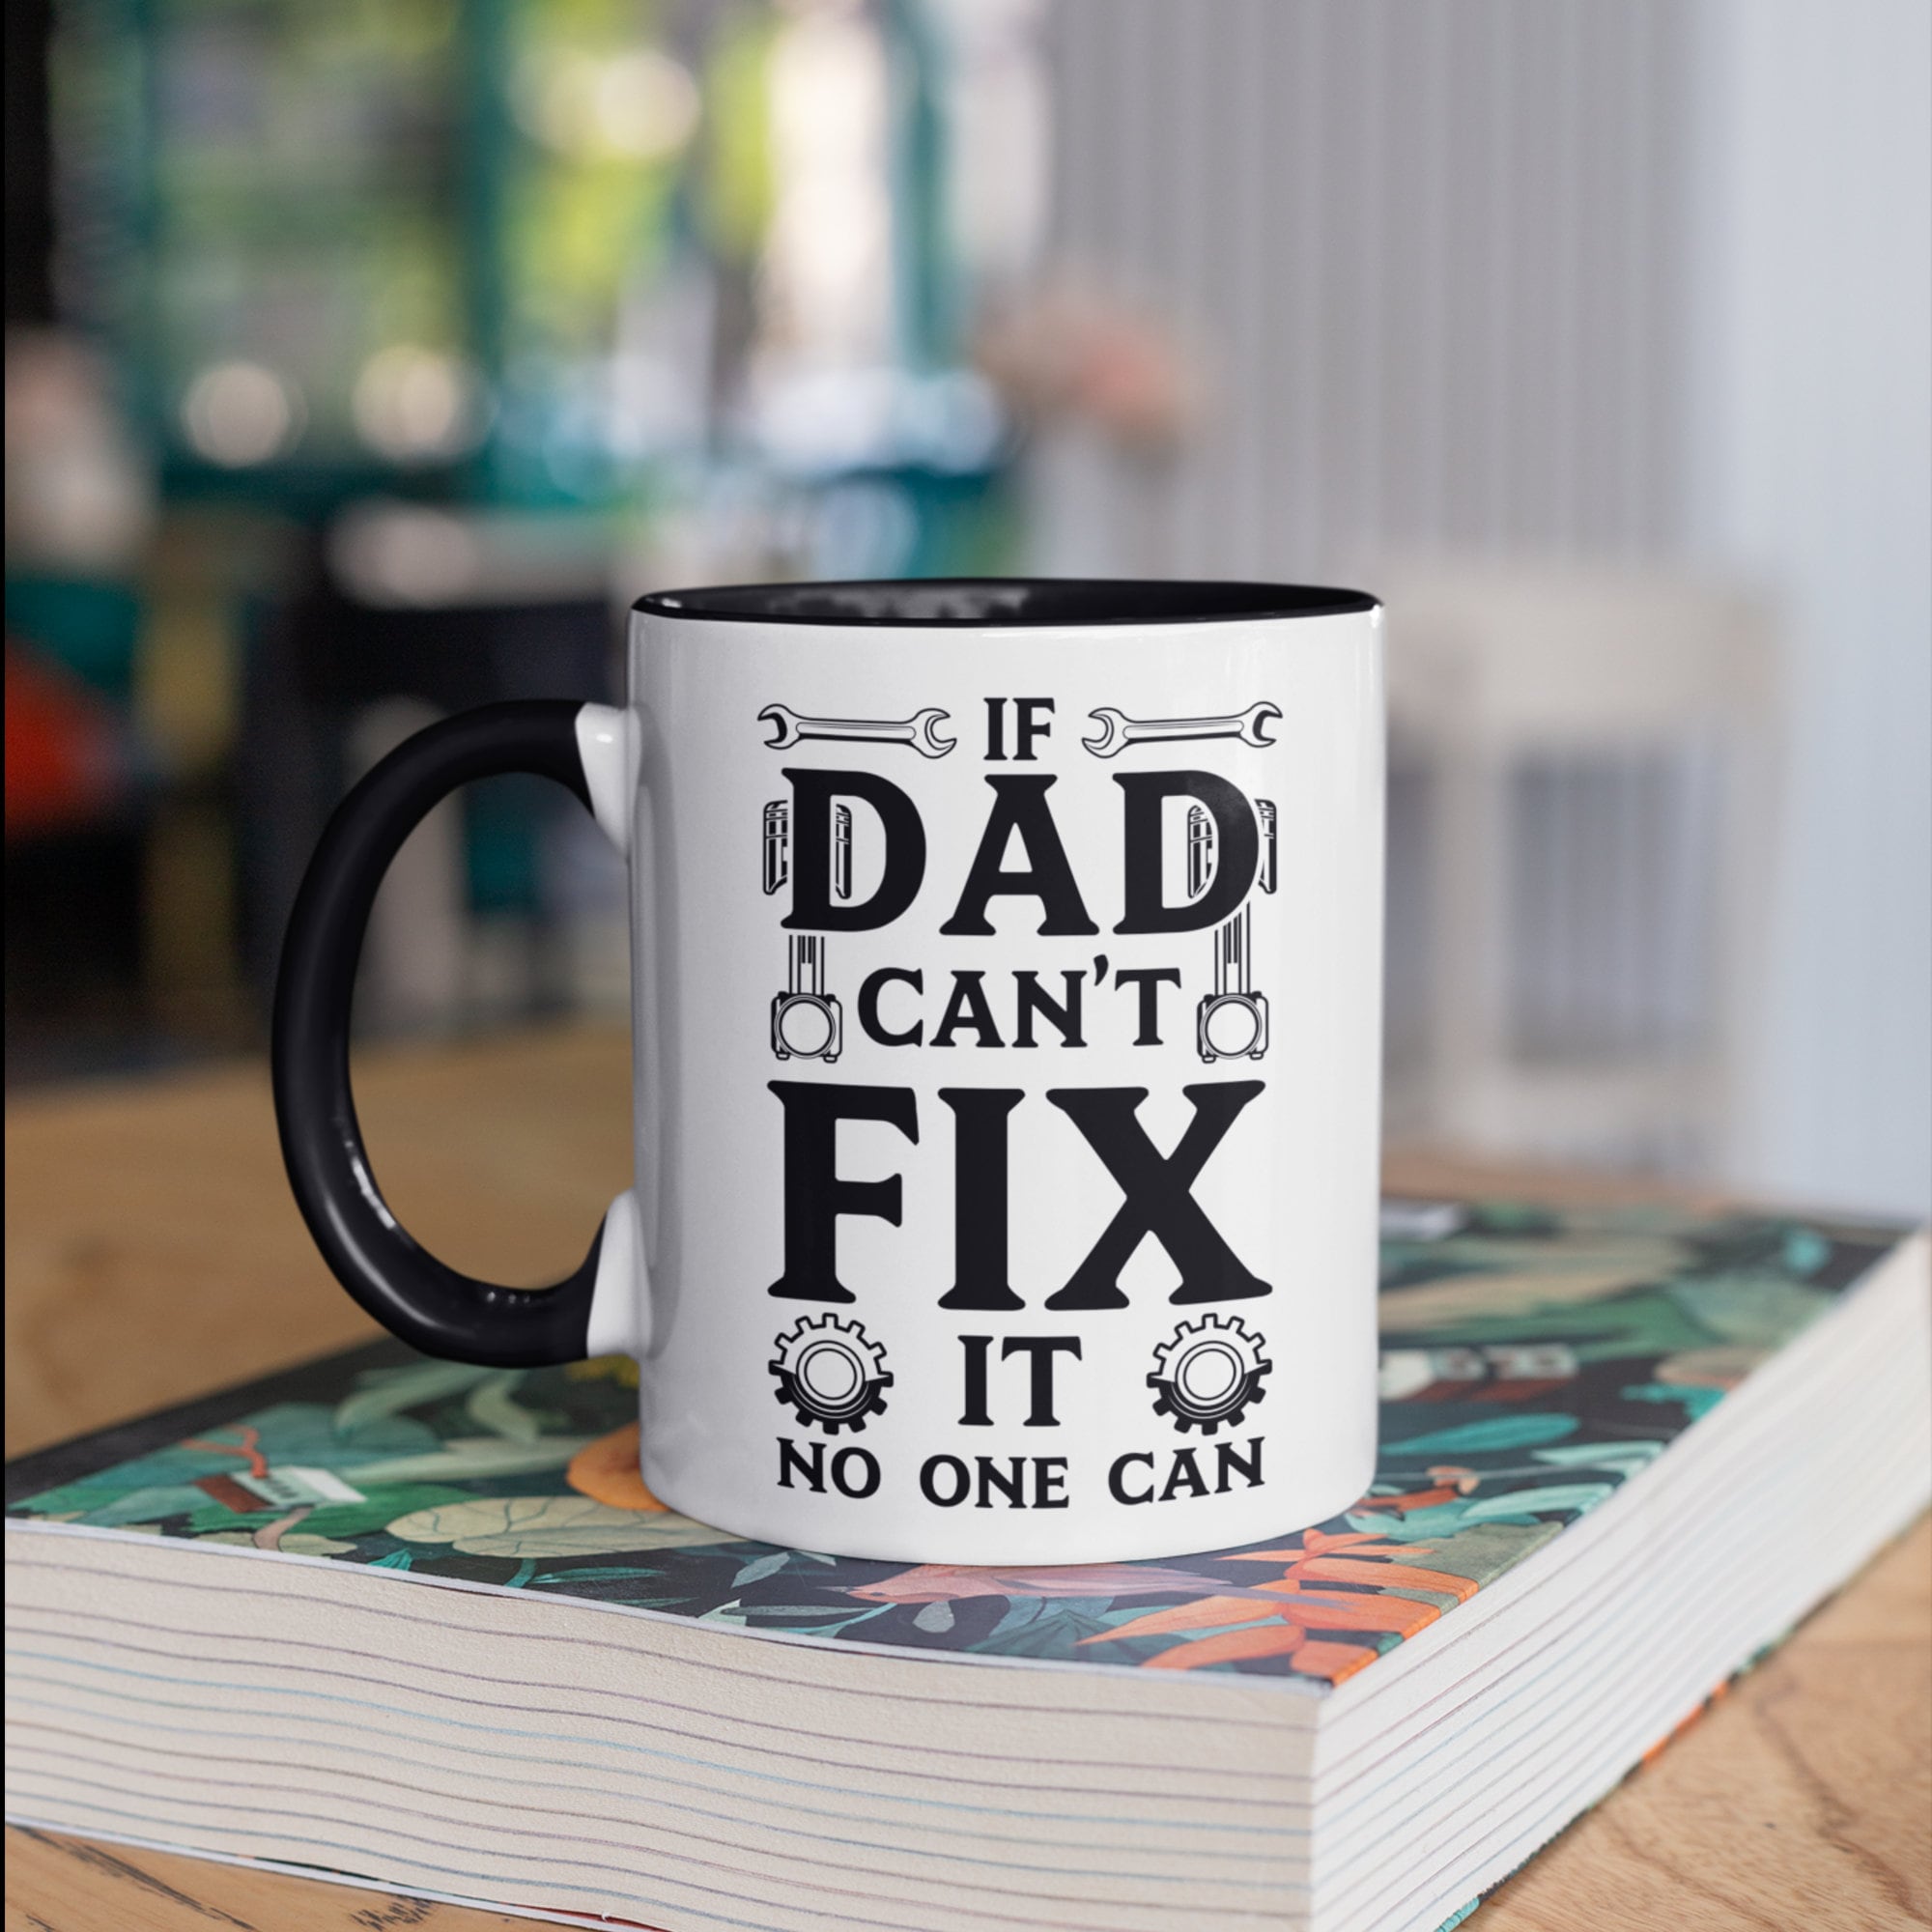 Coffee Mugs Car Guys Make Best Dads Funny Gifts for Mechanic, Mechanical Father Coffee Lovers 11oz 15oz White Mug Christmas Gift